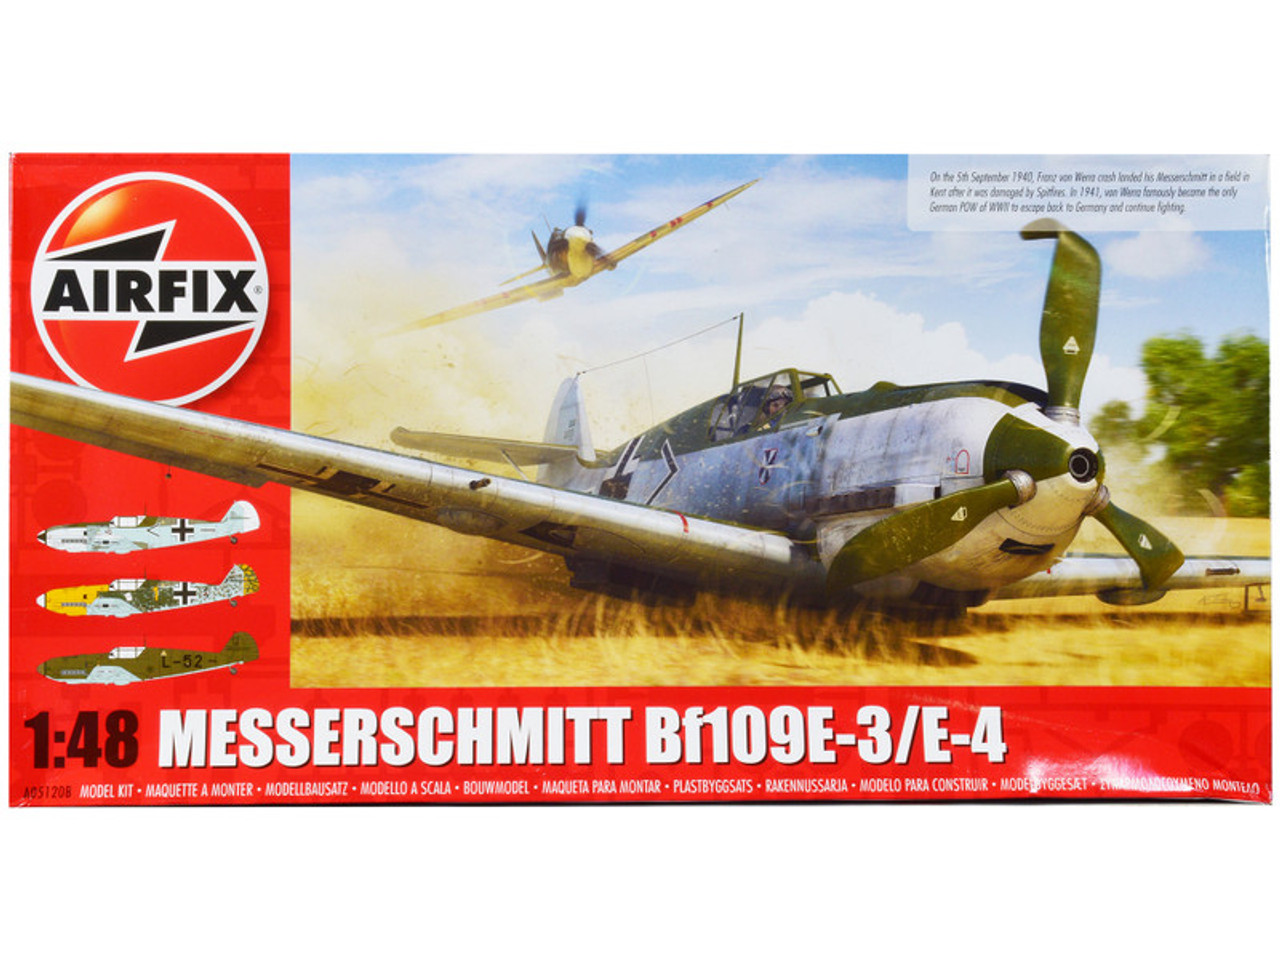 Skill 2 Model Kit Messerschmitt Bf109E-3/E-4 Fighter Aircraft with 3 Scheme Options 1/48 Plastic Model Kit by Airfix